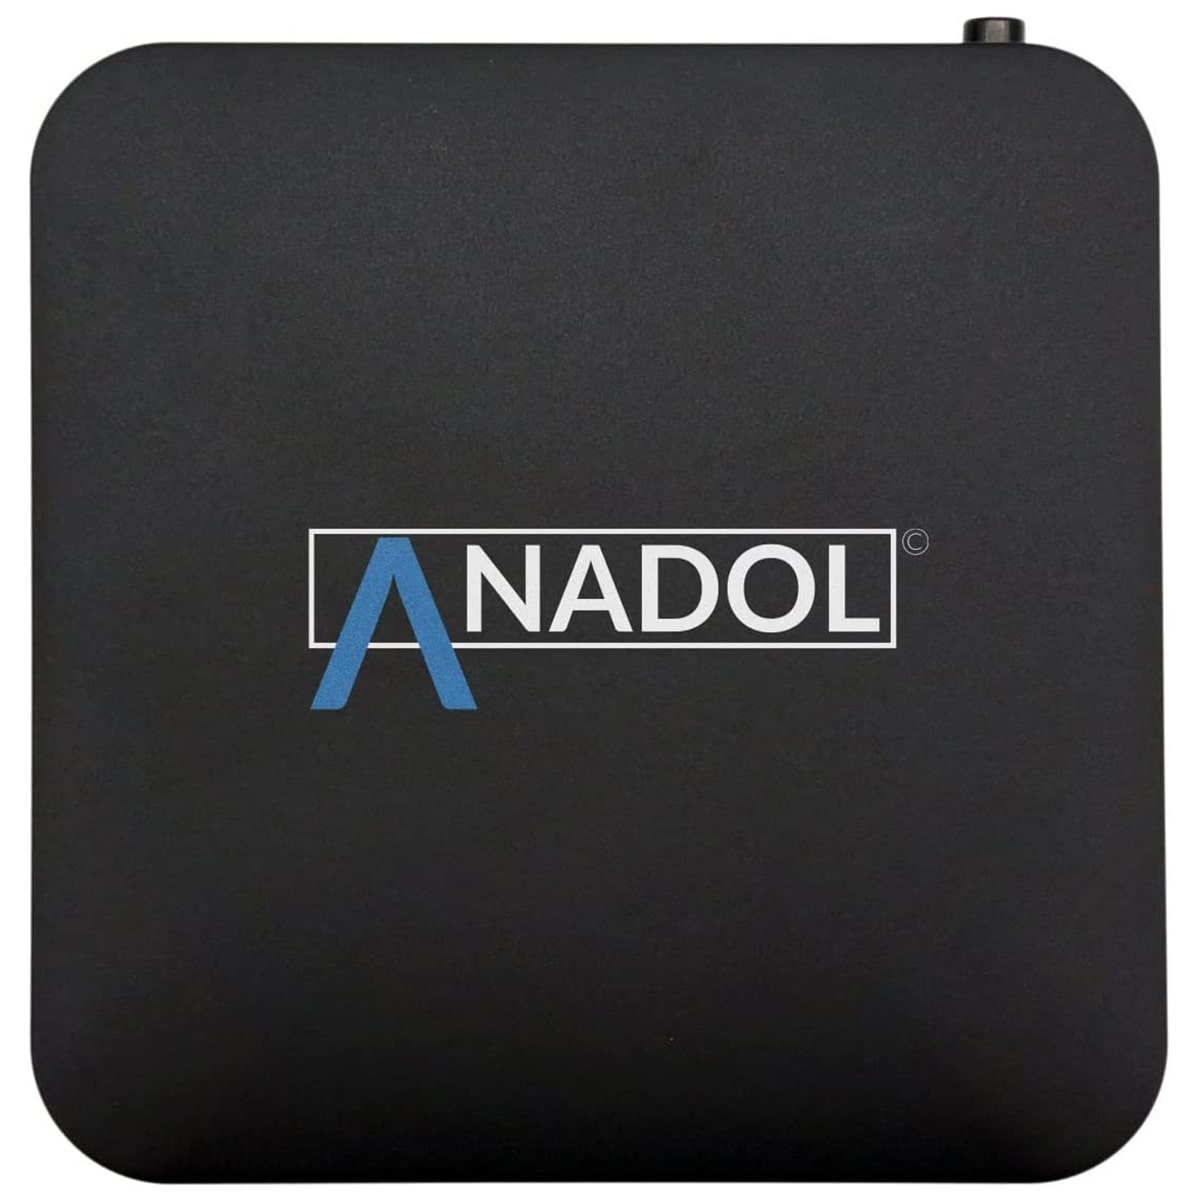 300 IP8 MBit/s 8 ANADOL GB Wifi